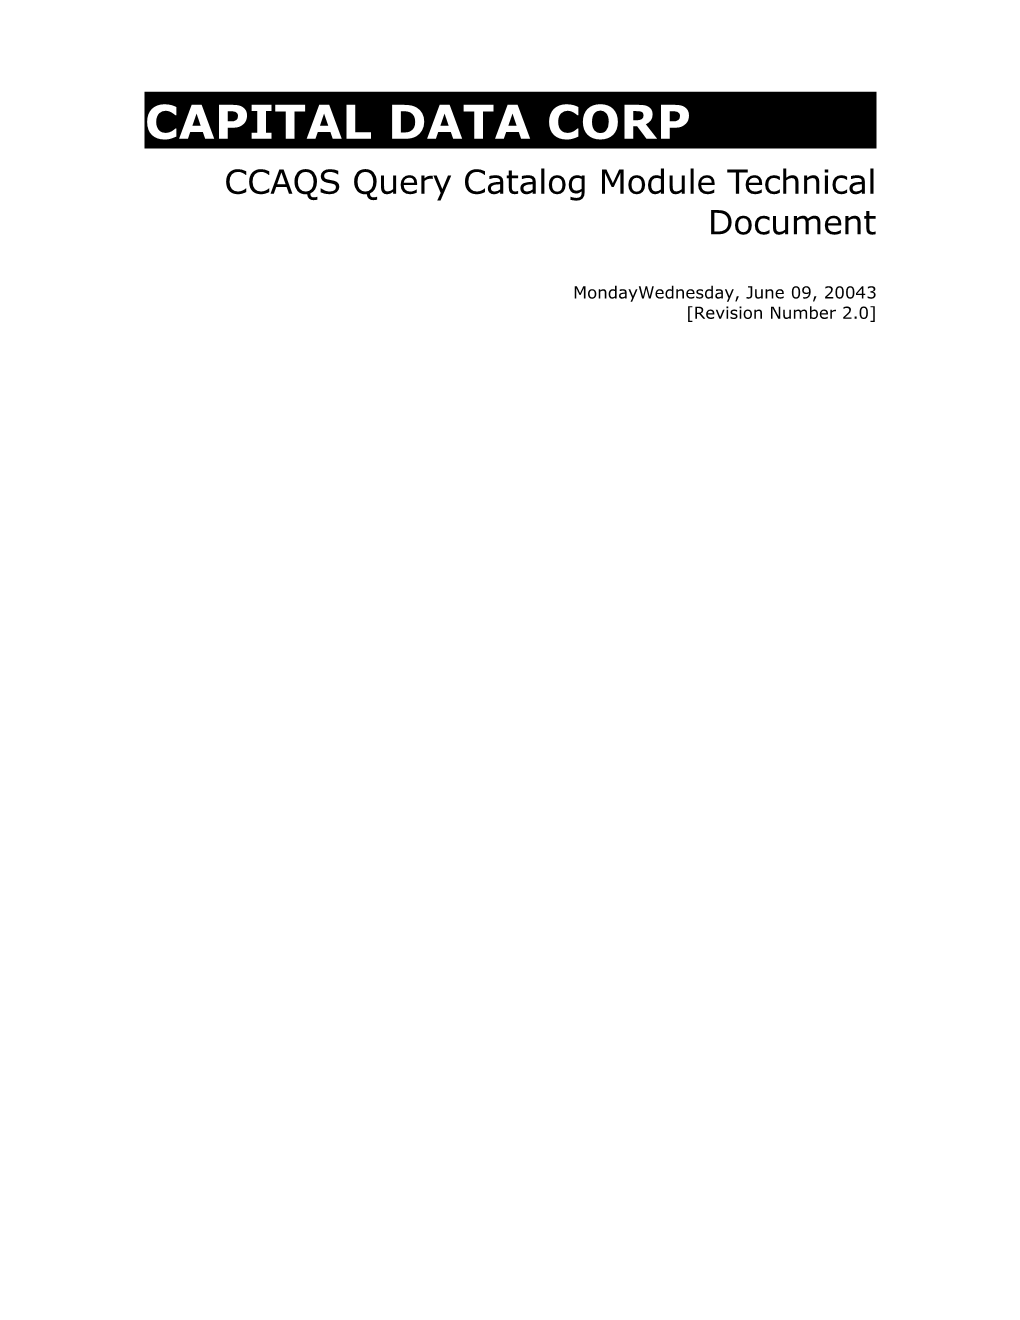 CCAQS Query Catalog Module Technical Document